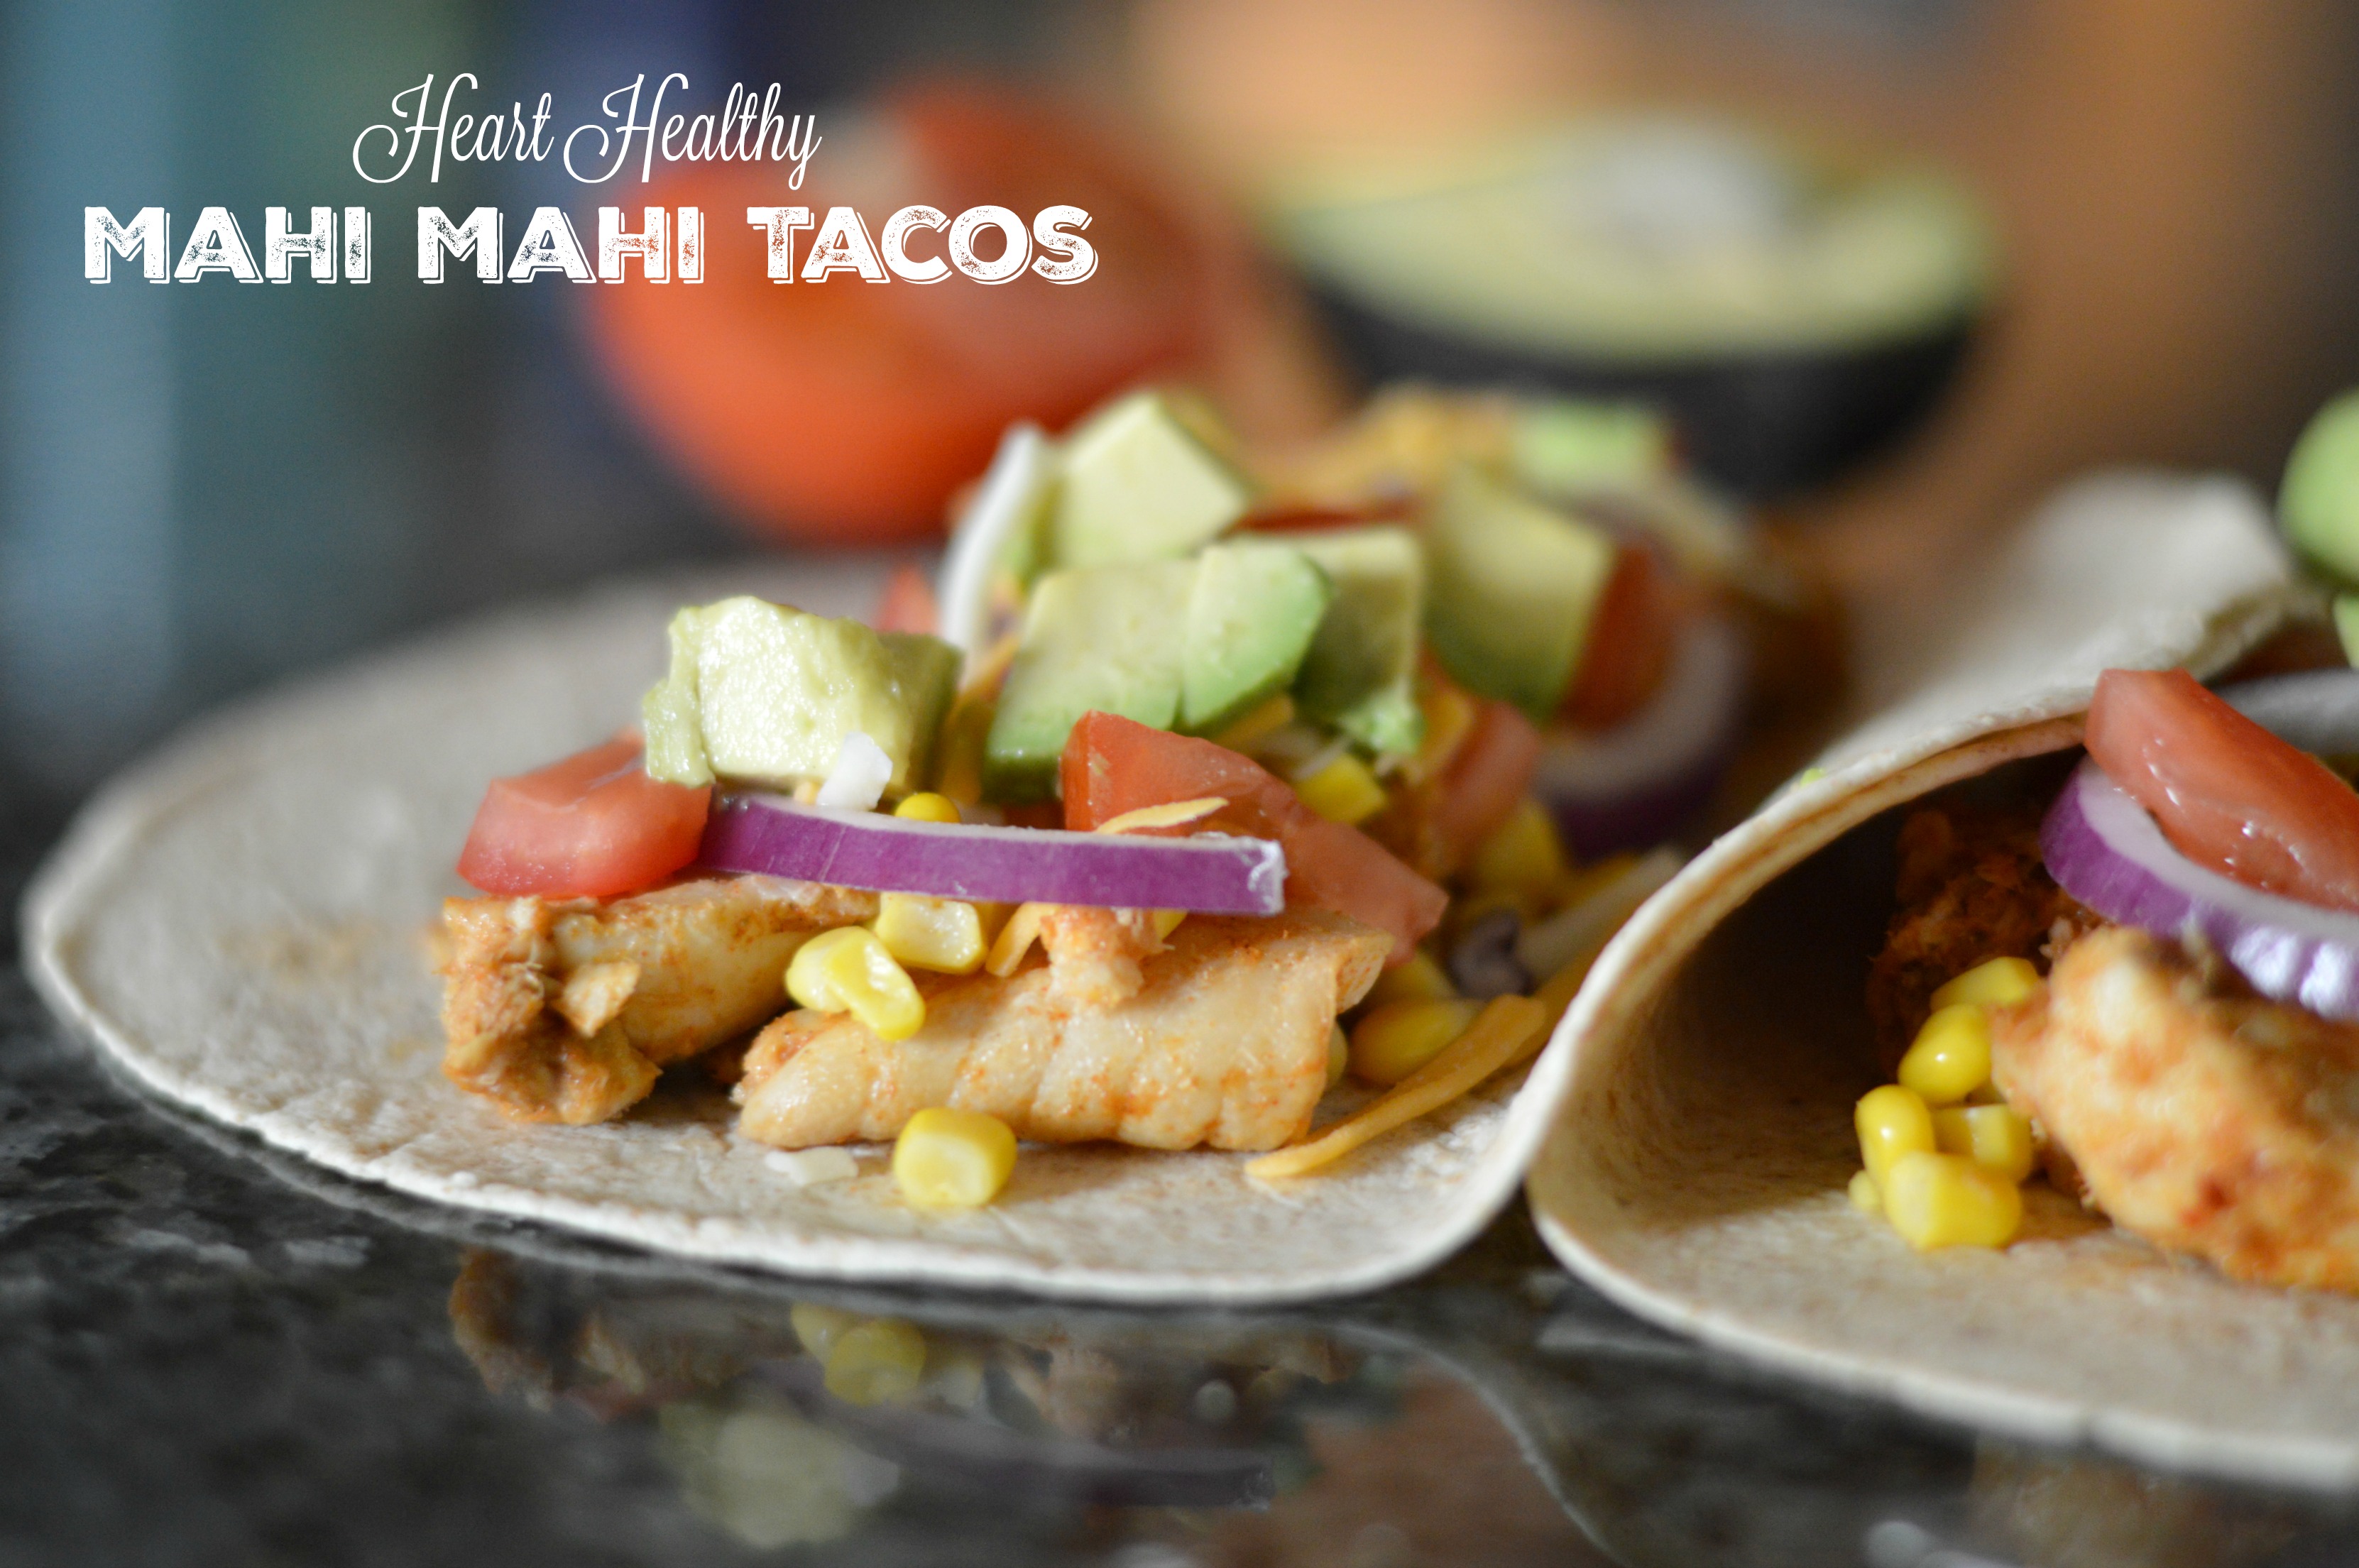 Heart Healthy Mahi Mahi Tacos SoFabFood